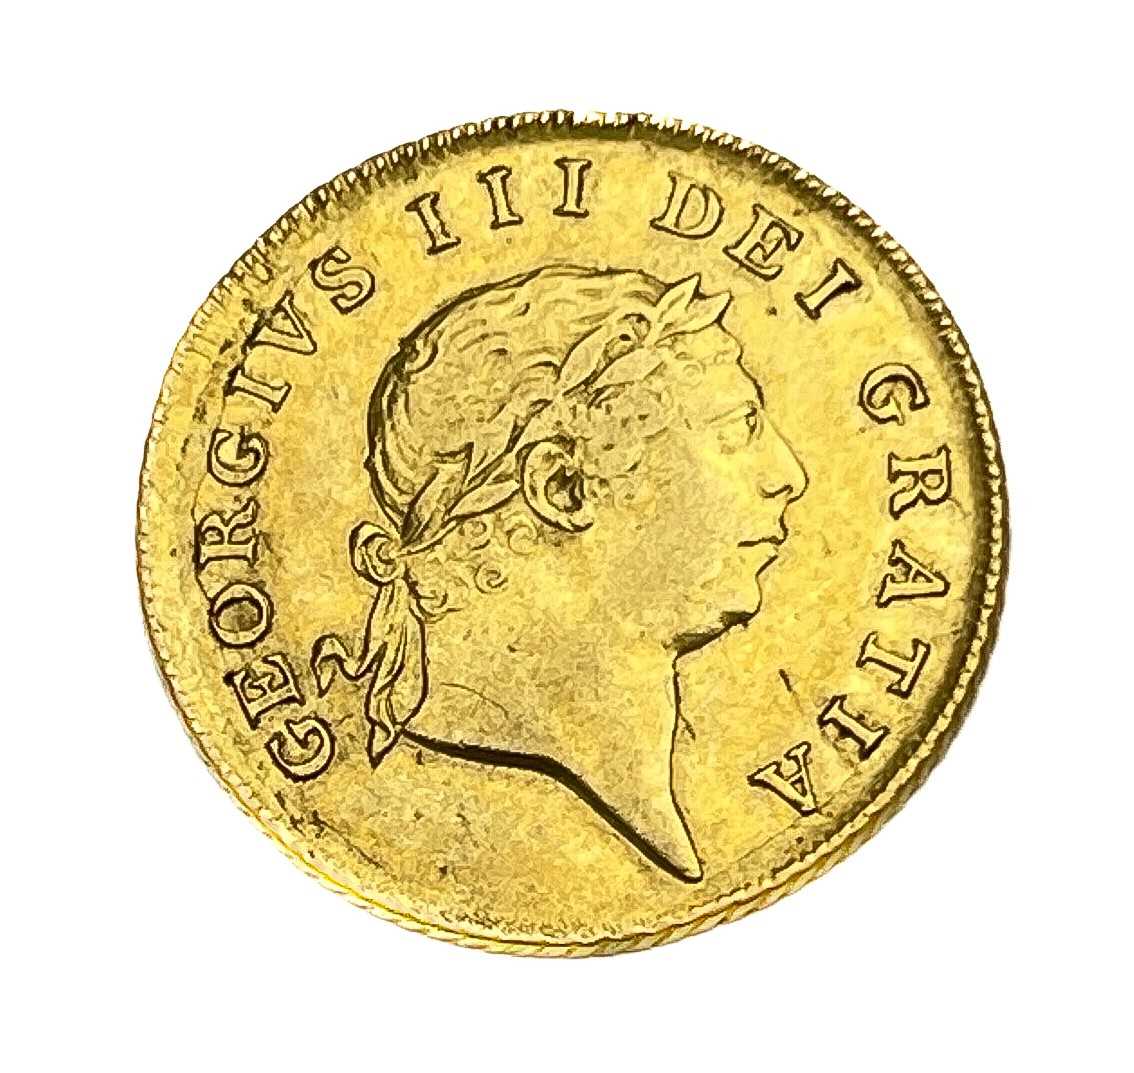 Half Guinea. George III, 1804, Iverson variety Obverse, Reverse C. S.3737